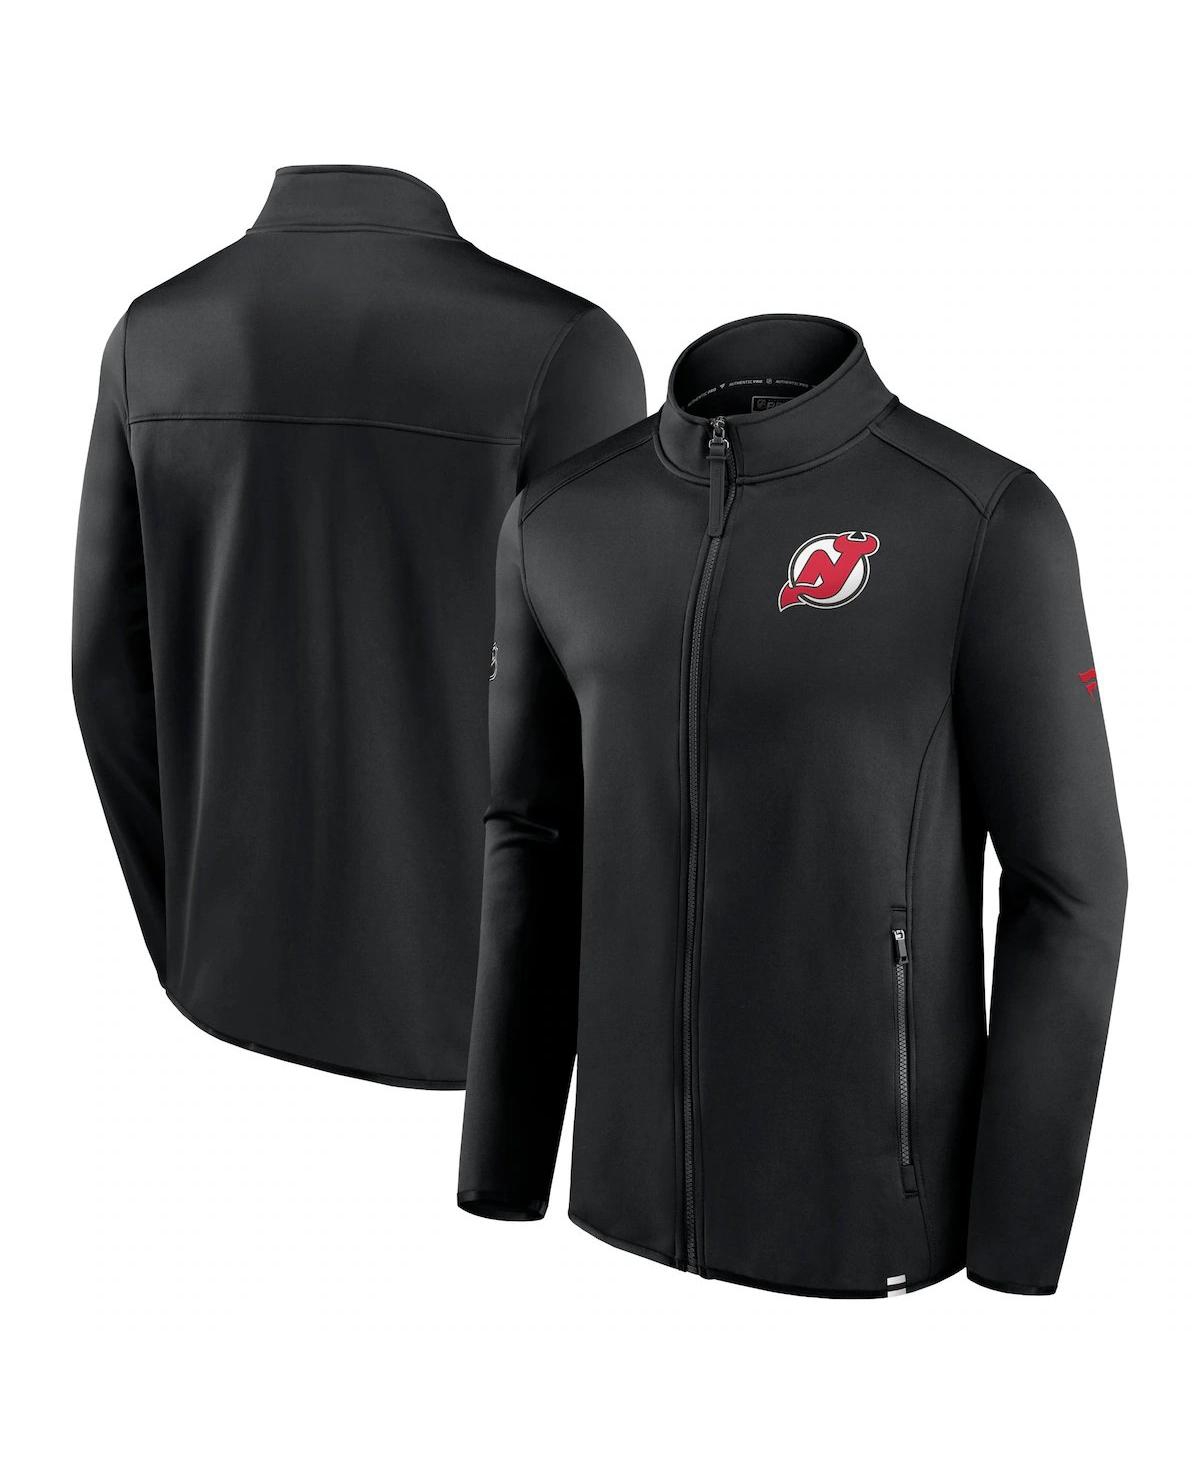 Fanatics Branded Men's Black New Jersey Devils Authentic Pro Full-Zip Jacket - Blck/blk